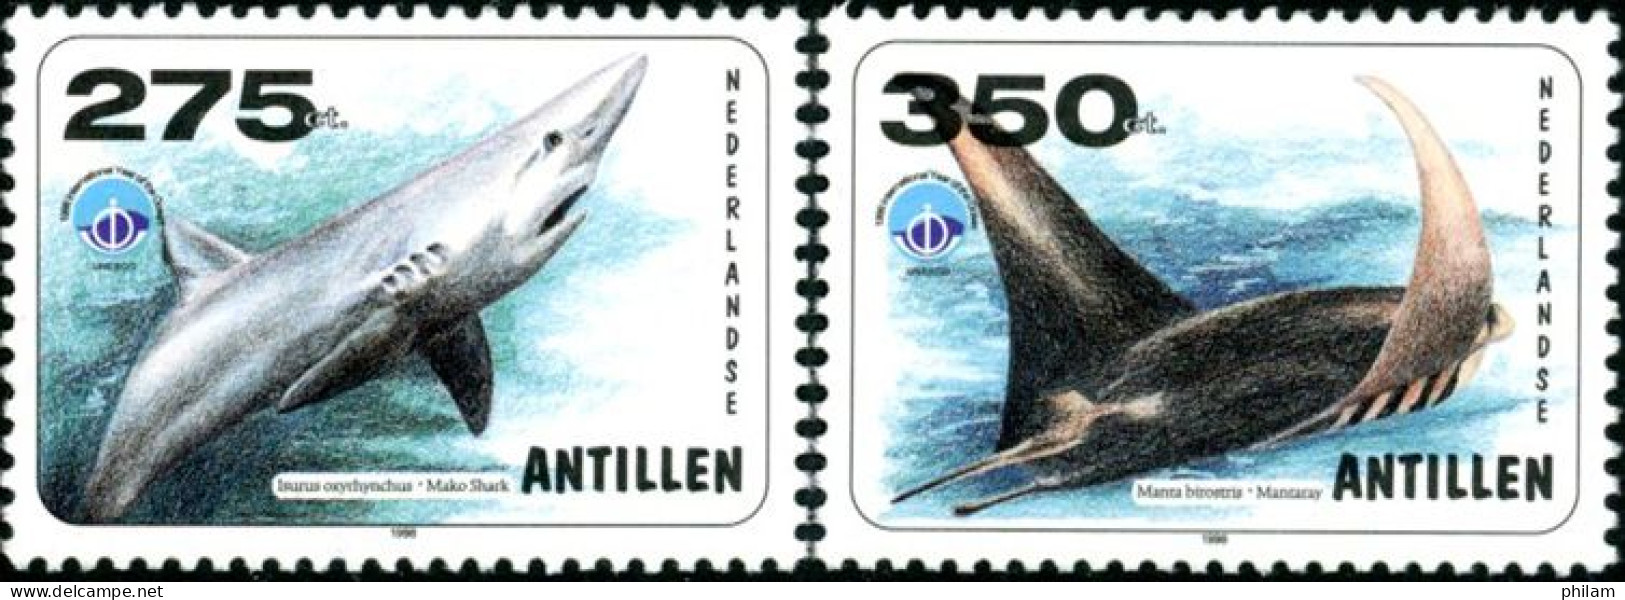 ANTILLES NEERLANDAISES 1998 - Année De L'Océan - Requins - 2 V. - Curacao, Netherlands Antilles, Aruba